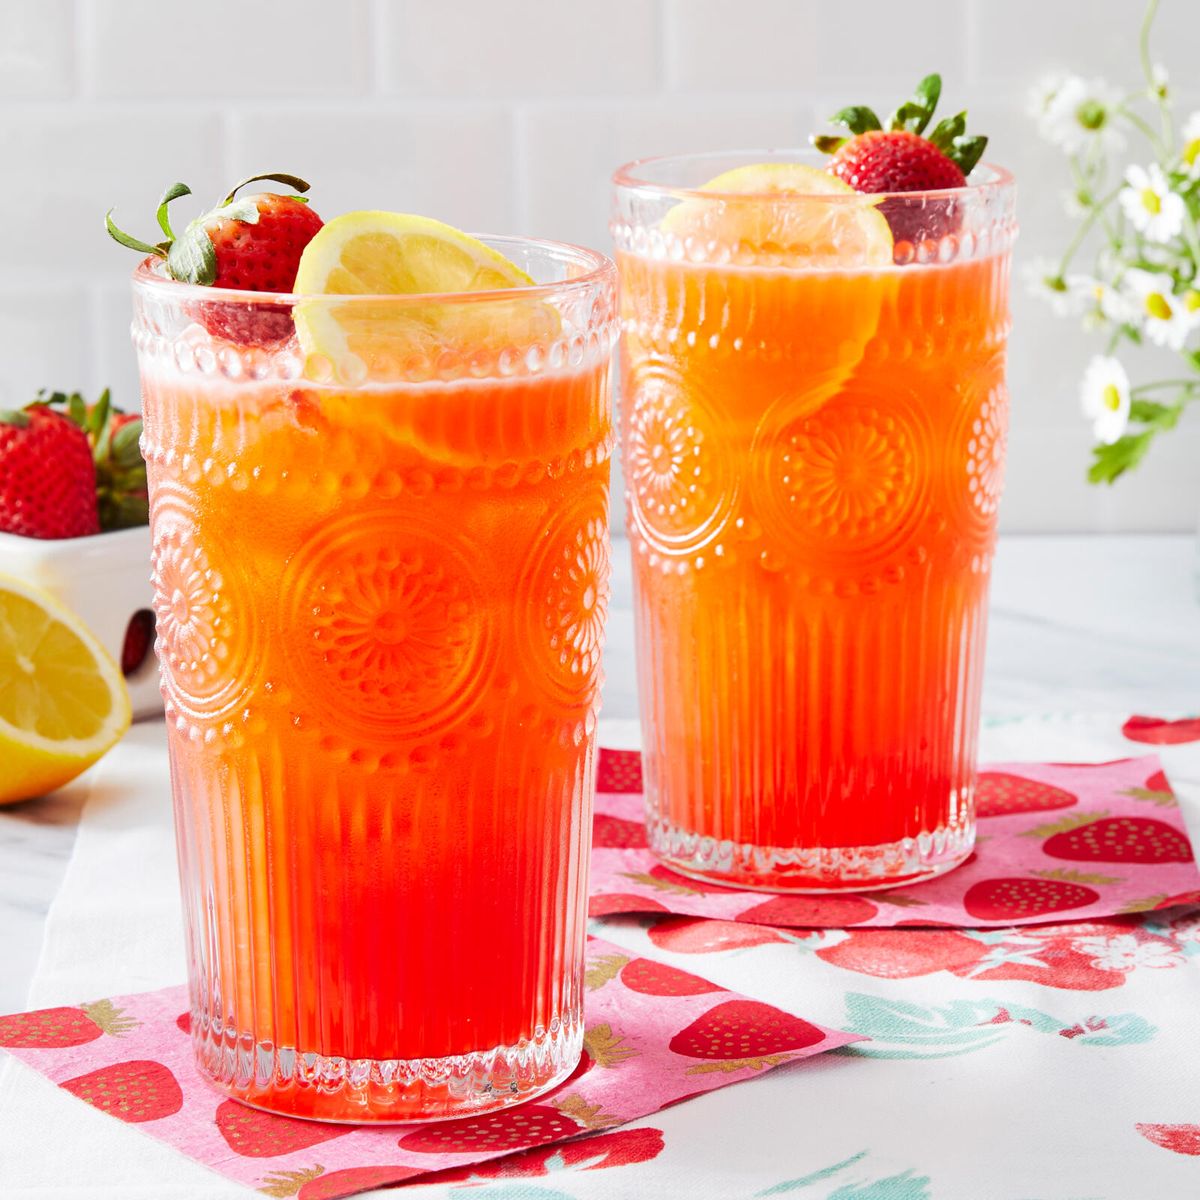 the pioneer woman's strawberry lemonade recipe